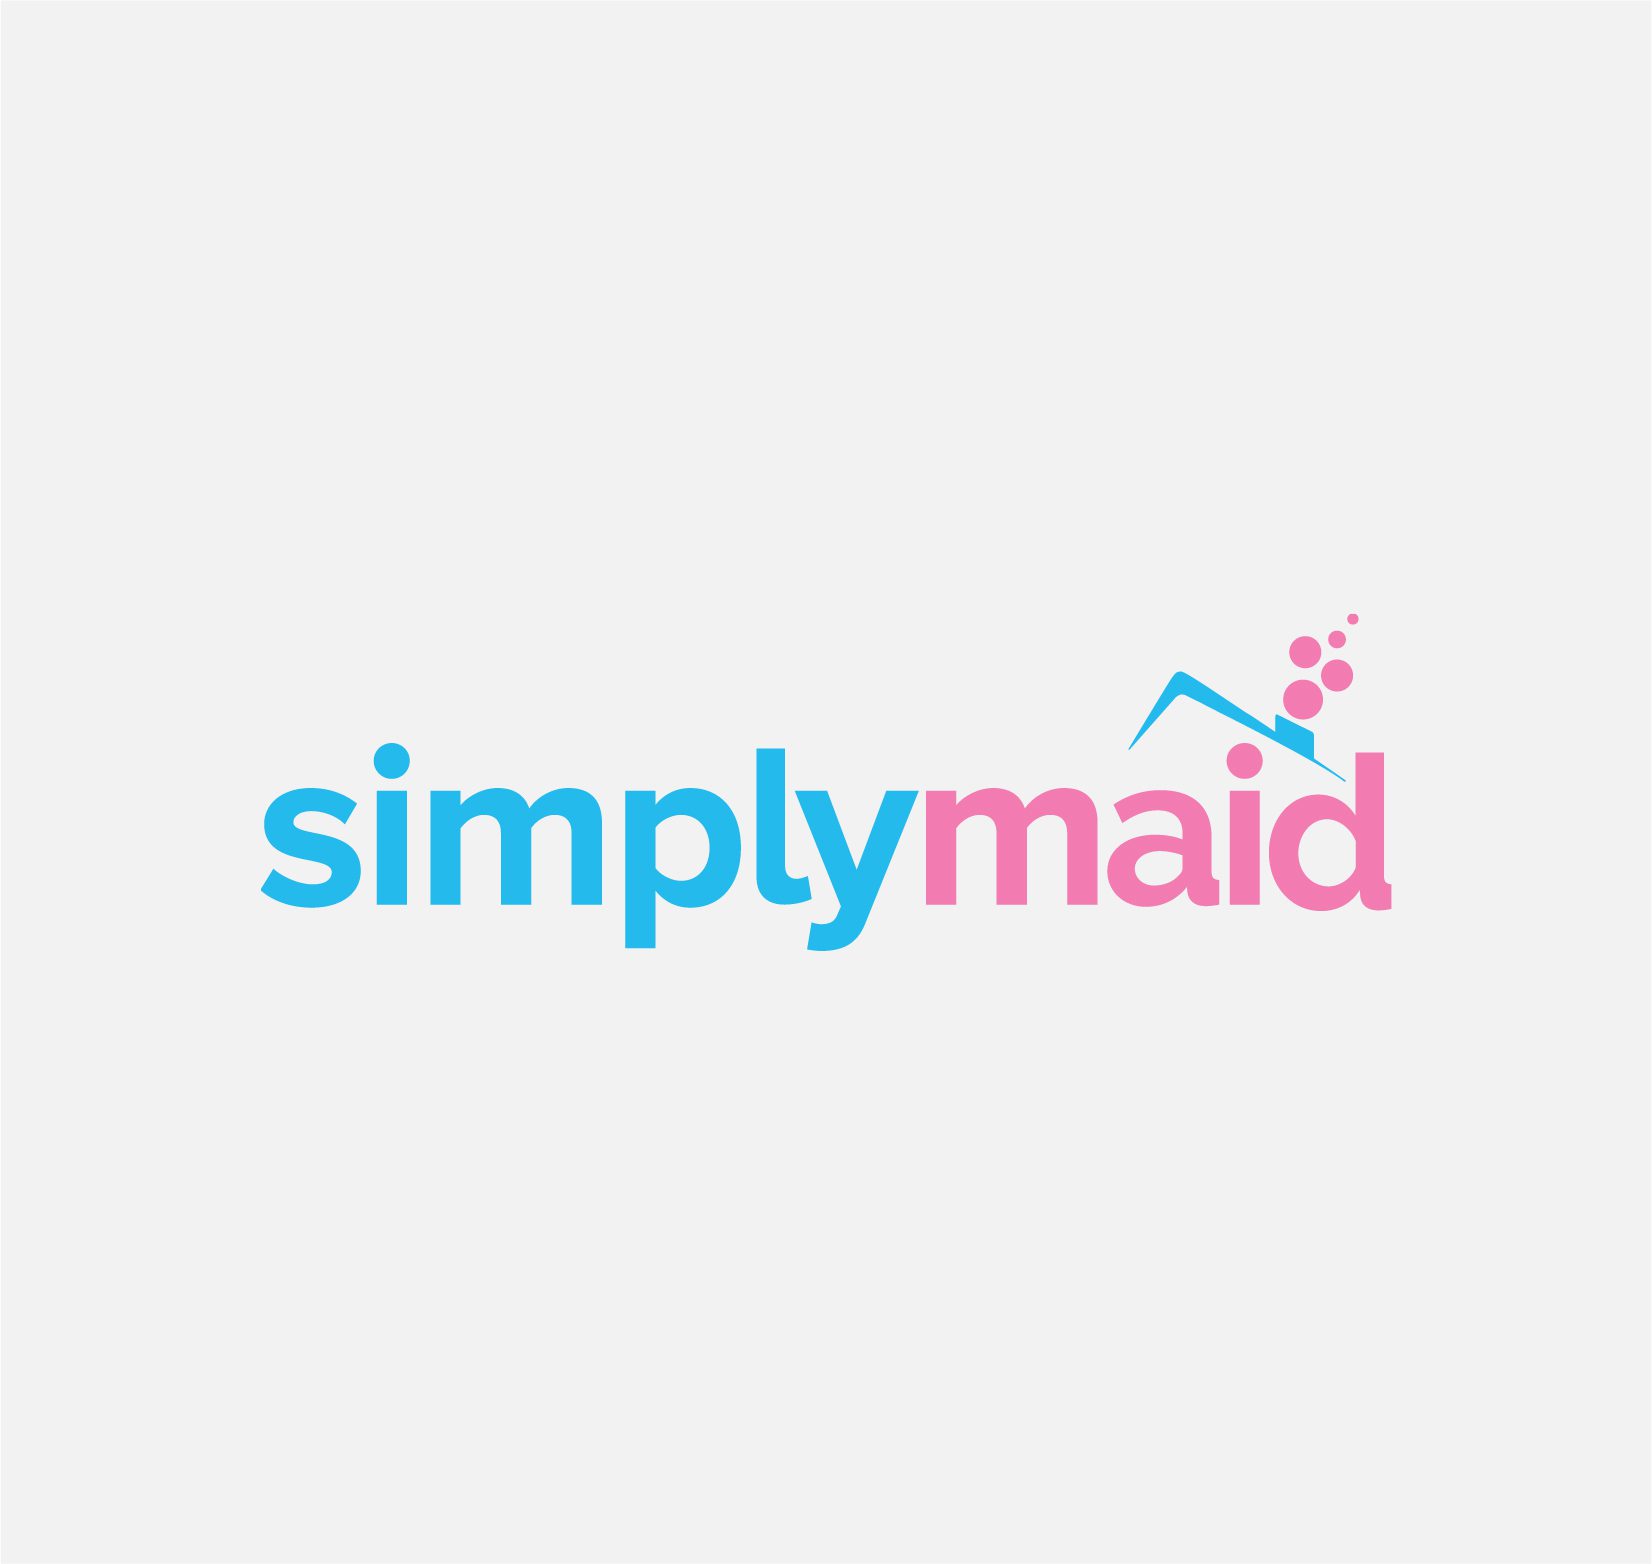 simplymaid logo